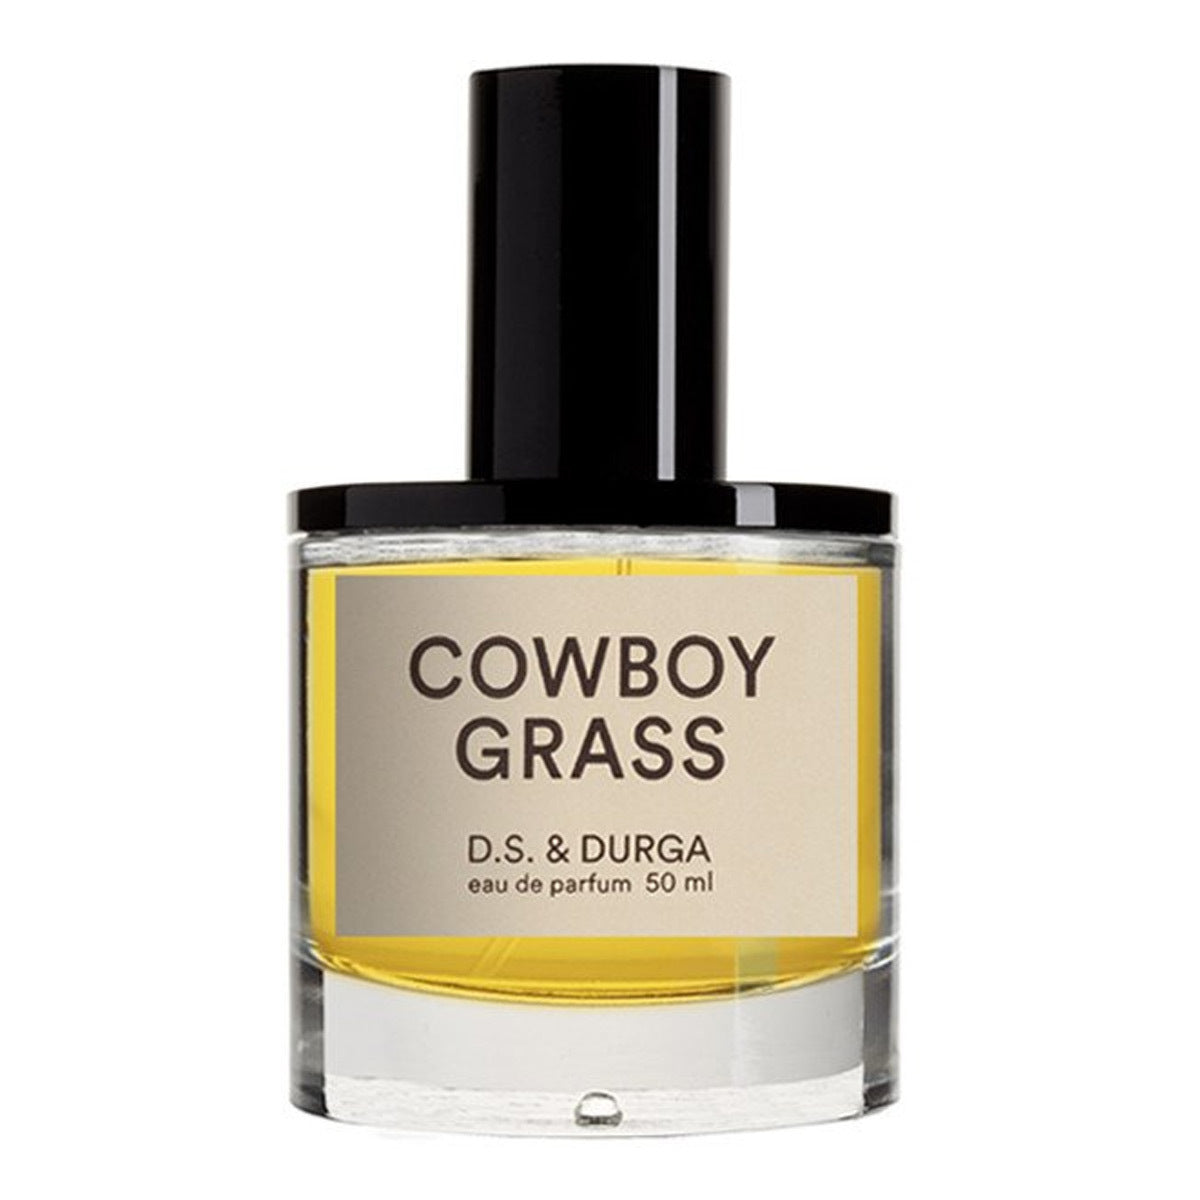 Primary image of Cowboy Grass Eau de Parfum